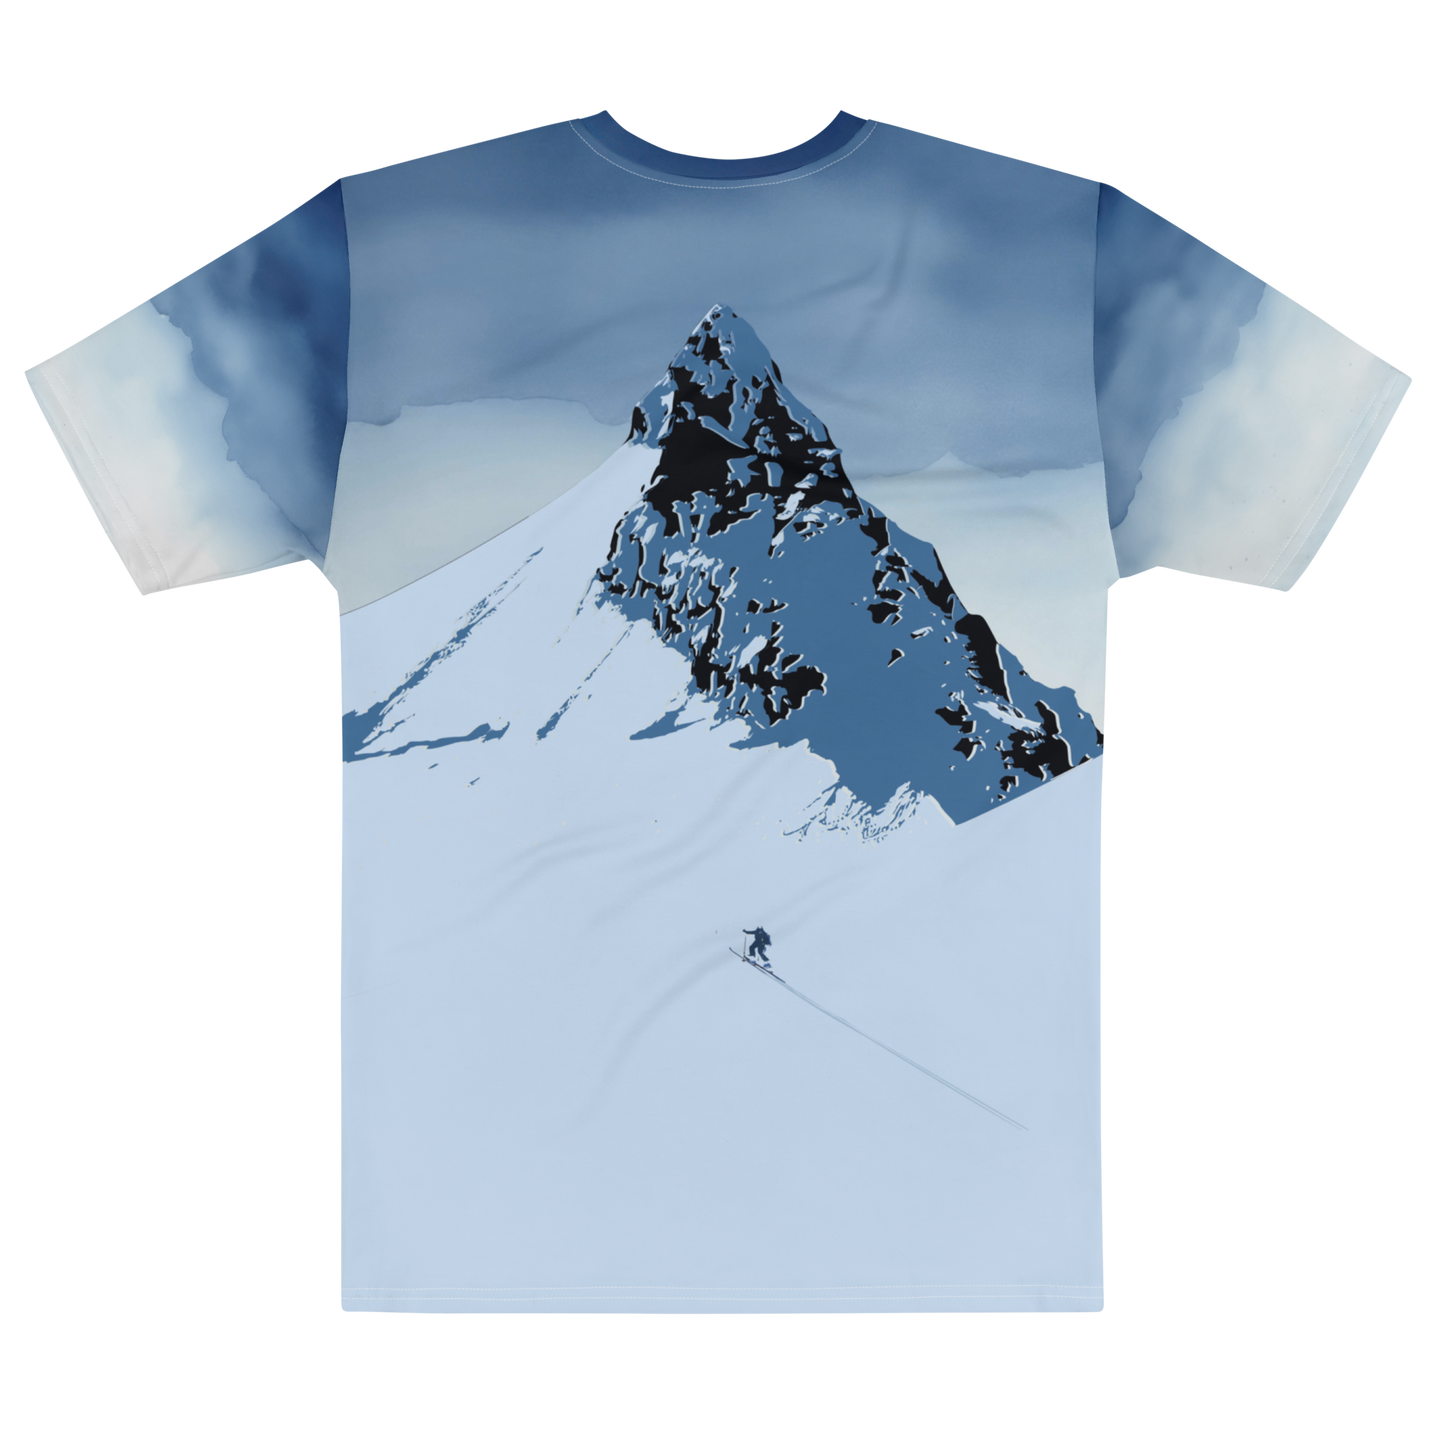 The King Royal tee - t-skjorte - Kolåstinden Alps of Sunnmøre